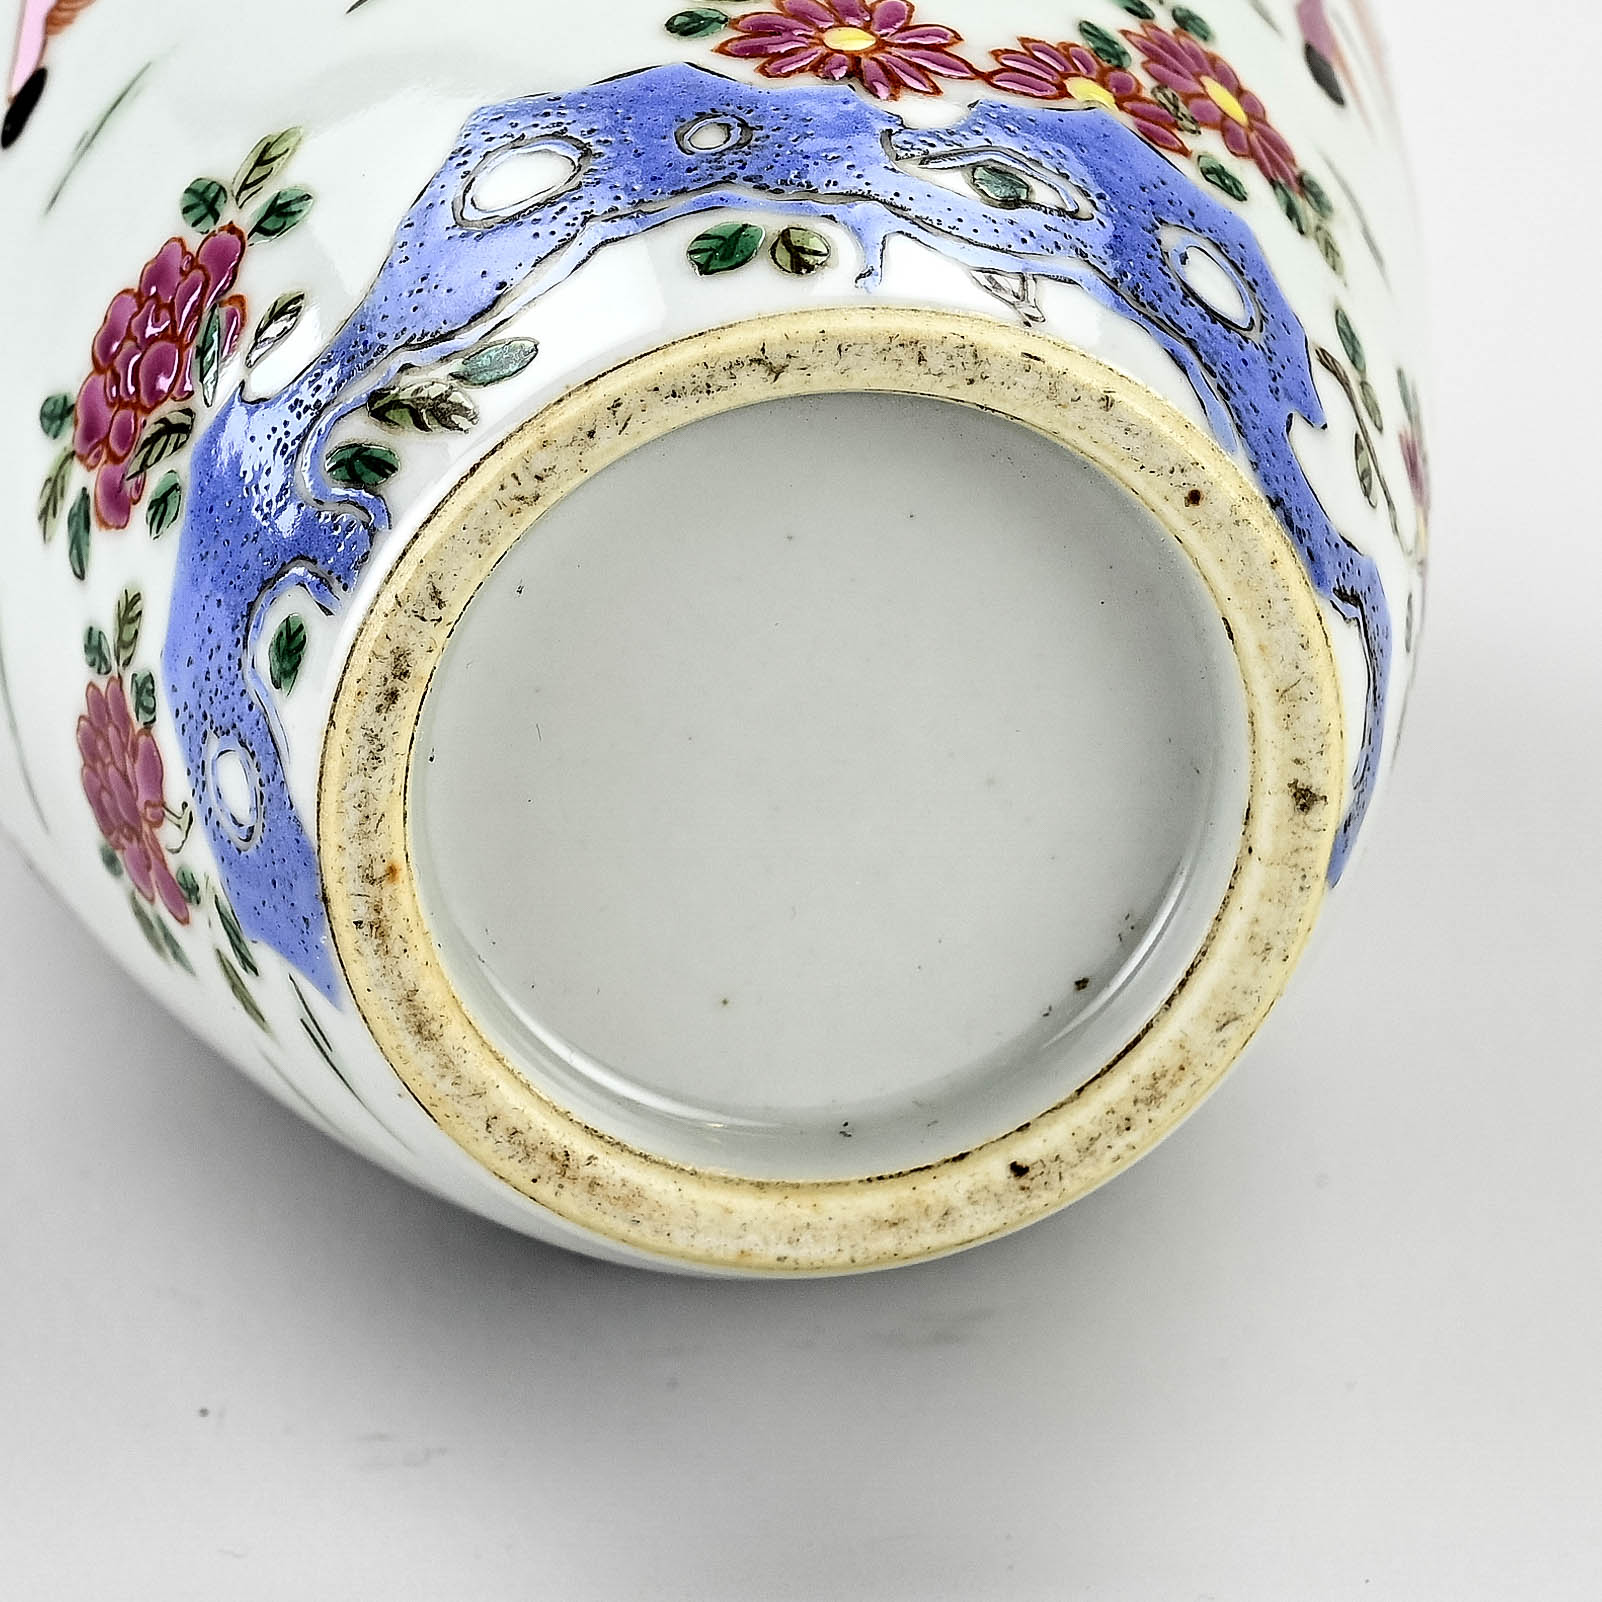 Chinese porcelain lamp base, H 25 cm. - Image 2 of 2